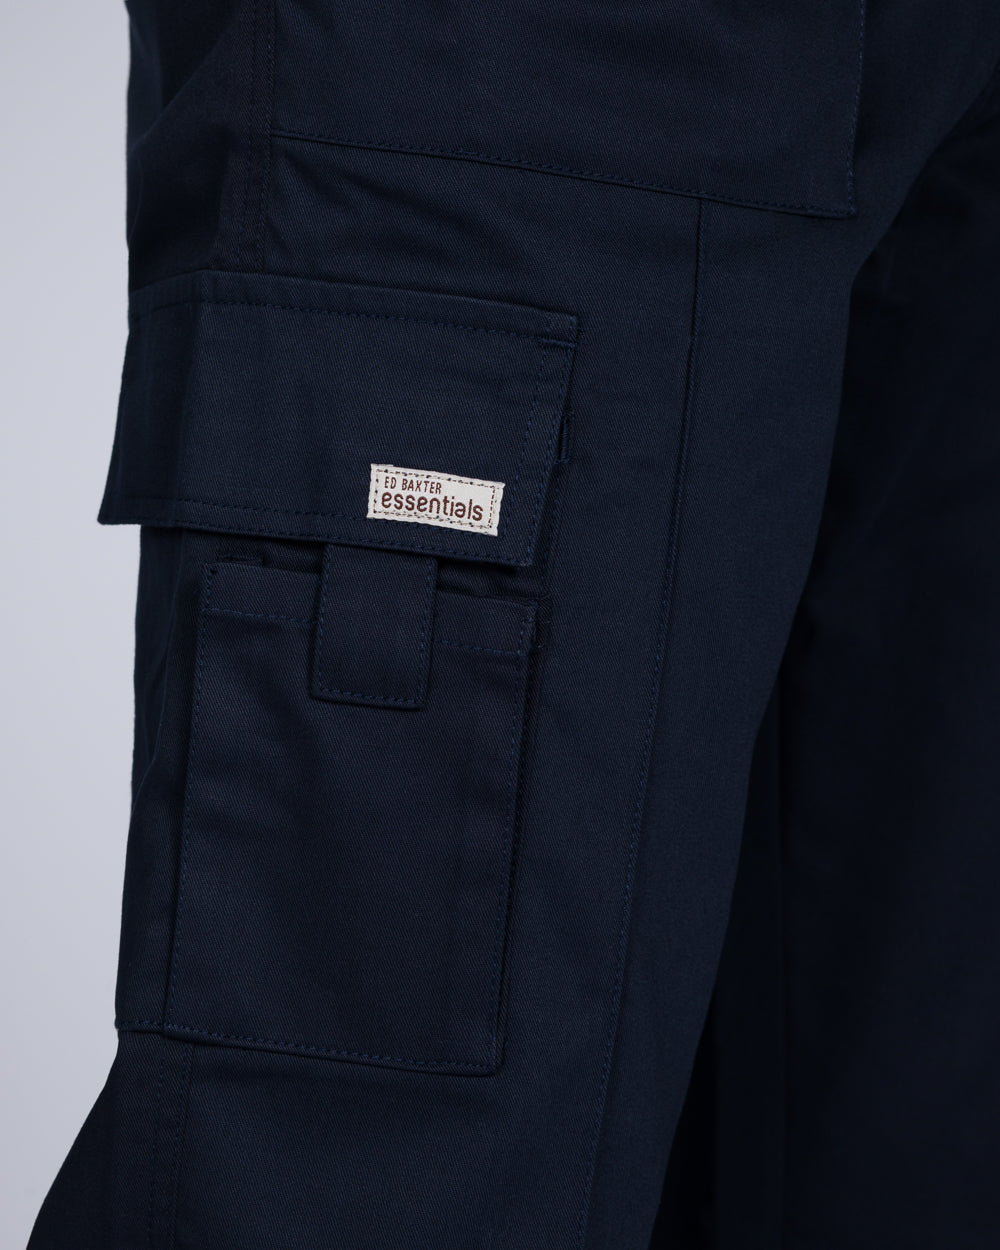 Ed Baxter Multi Pocket Tall Workwear Trousers (navy)